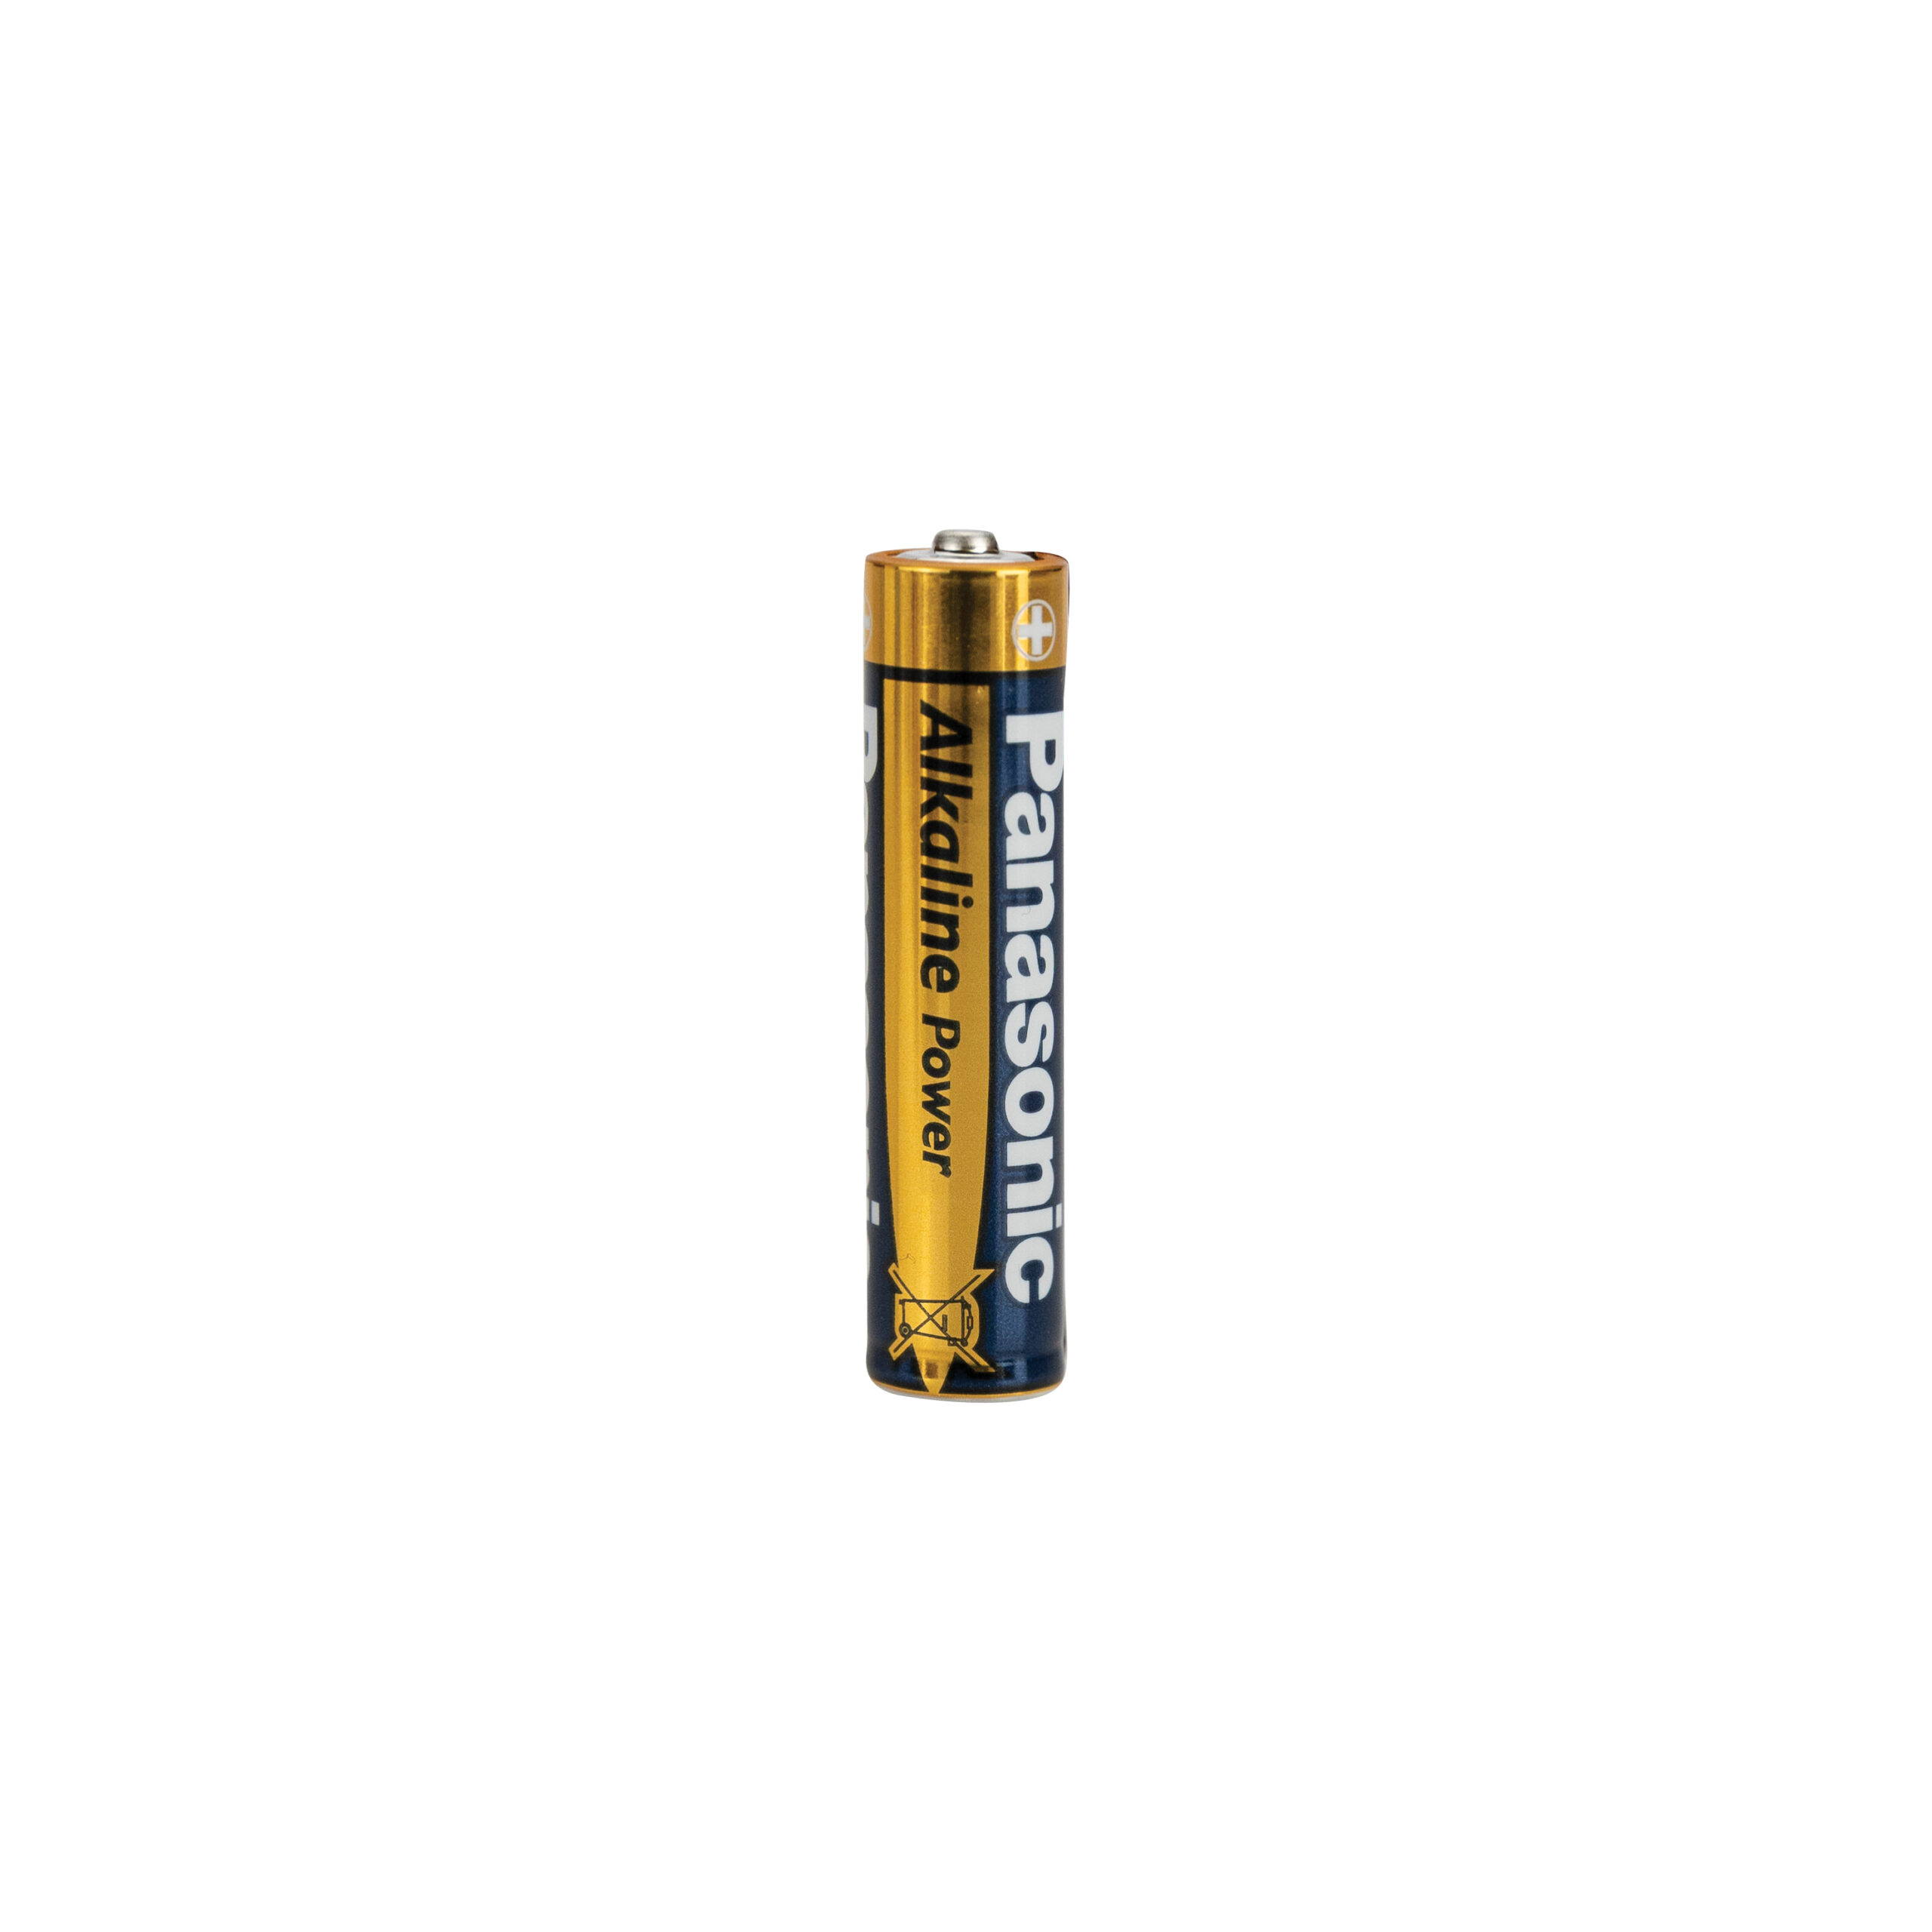 Baterie alkaliczne 4 szt. AAA R03 Panasonic 7357_04